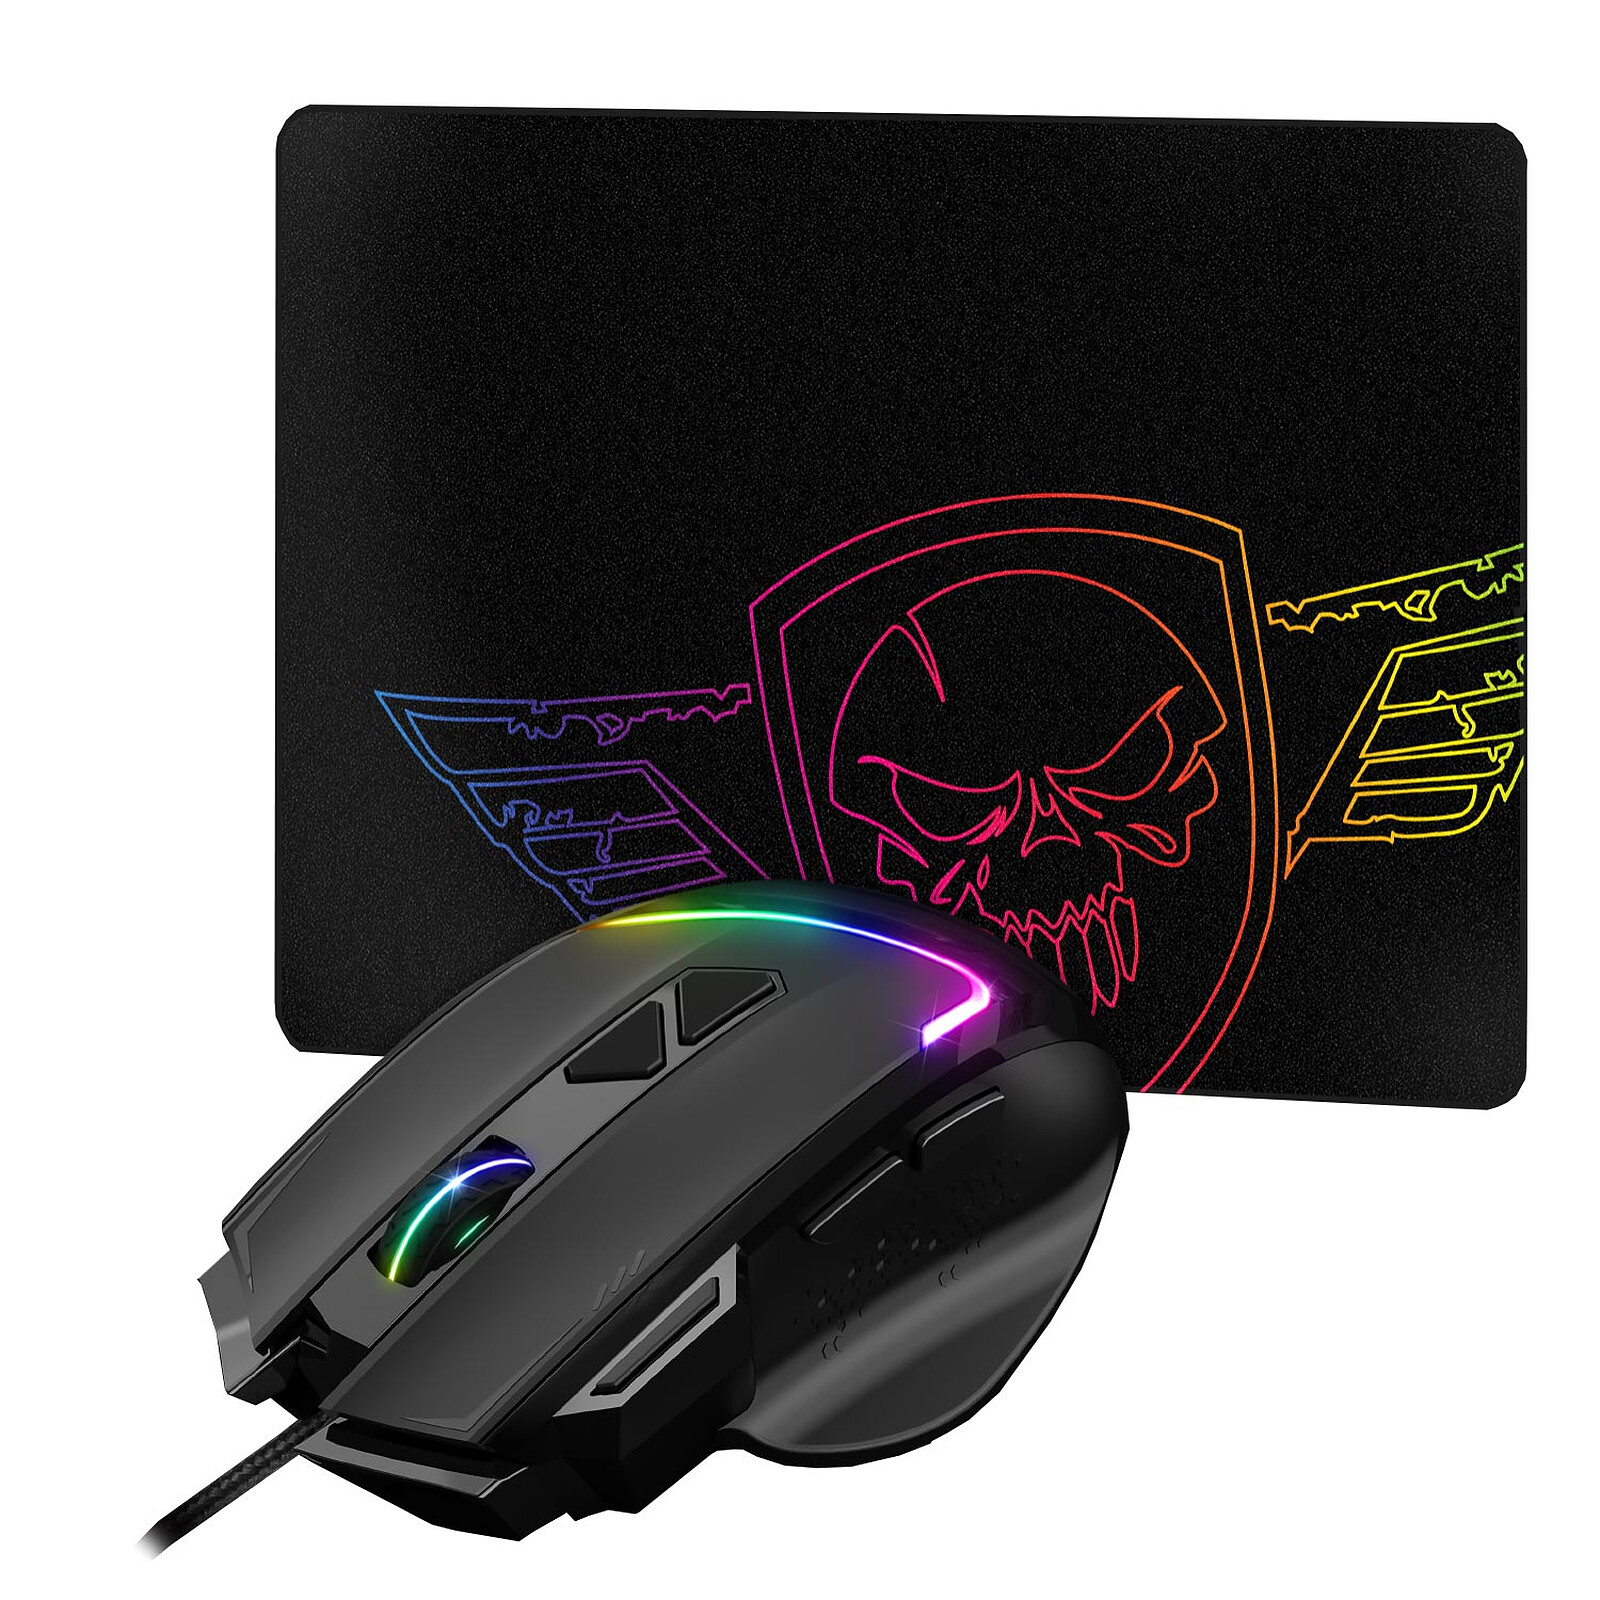 Spirit of Gamer Pro-M3 RGB - Mouse - LDLC 3-year warranty